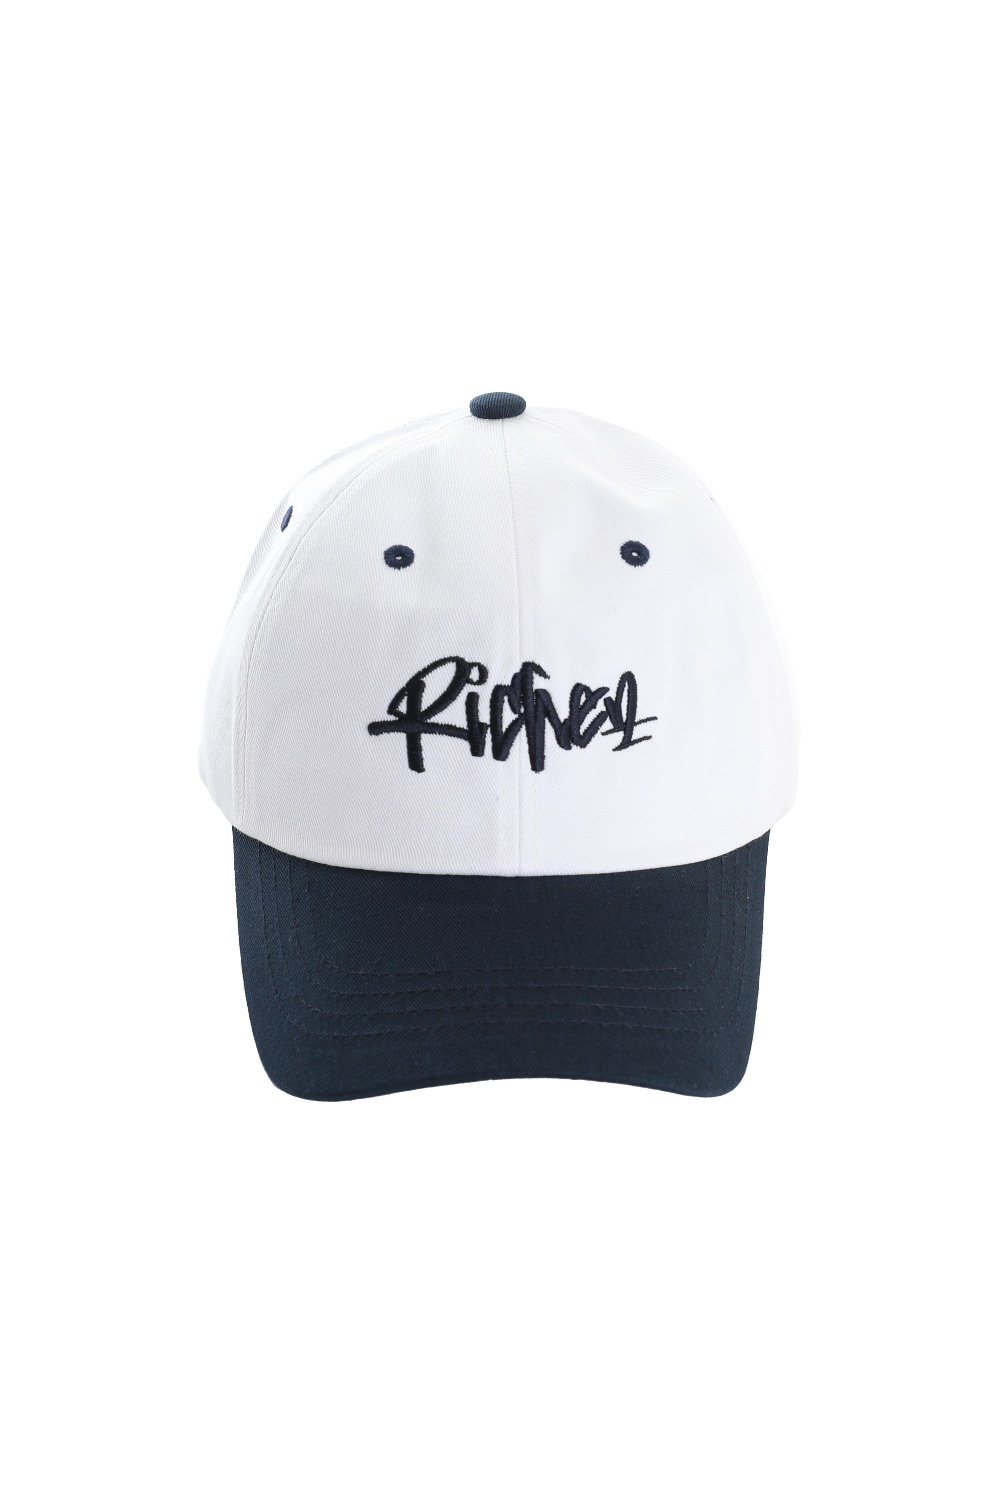 RICHEZ x PRINGCO BALL CAP (WHITE) RICHEZ